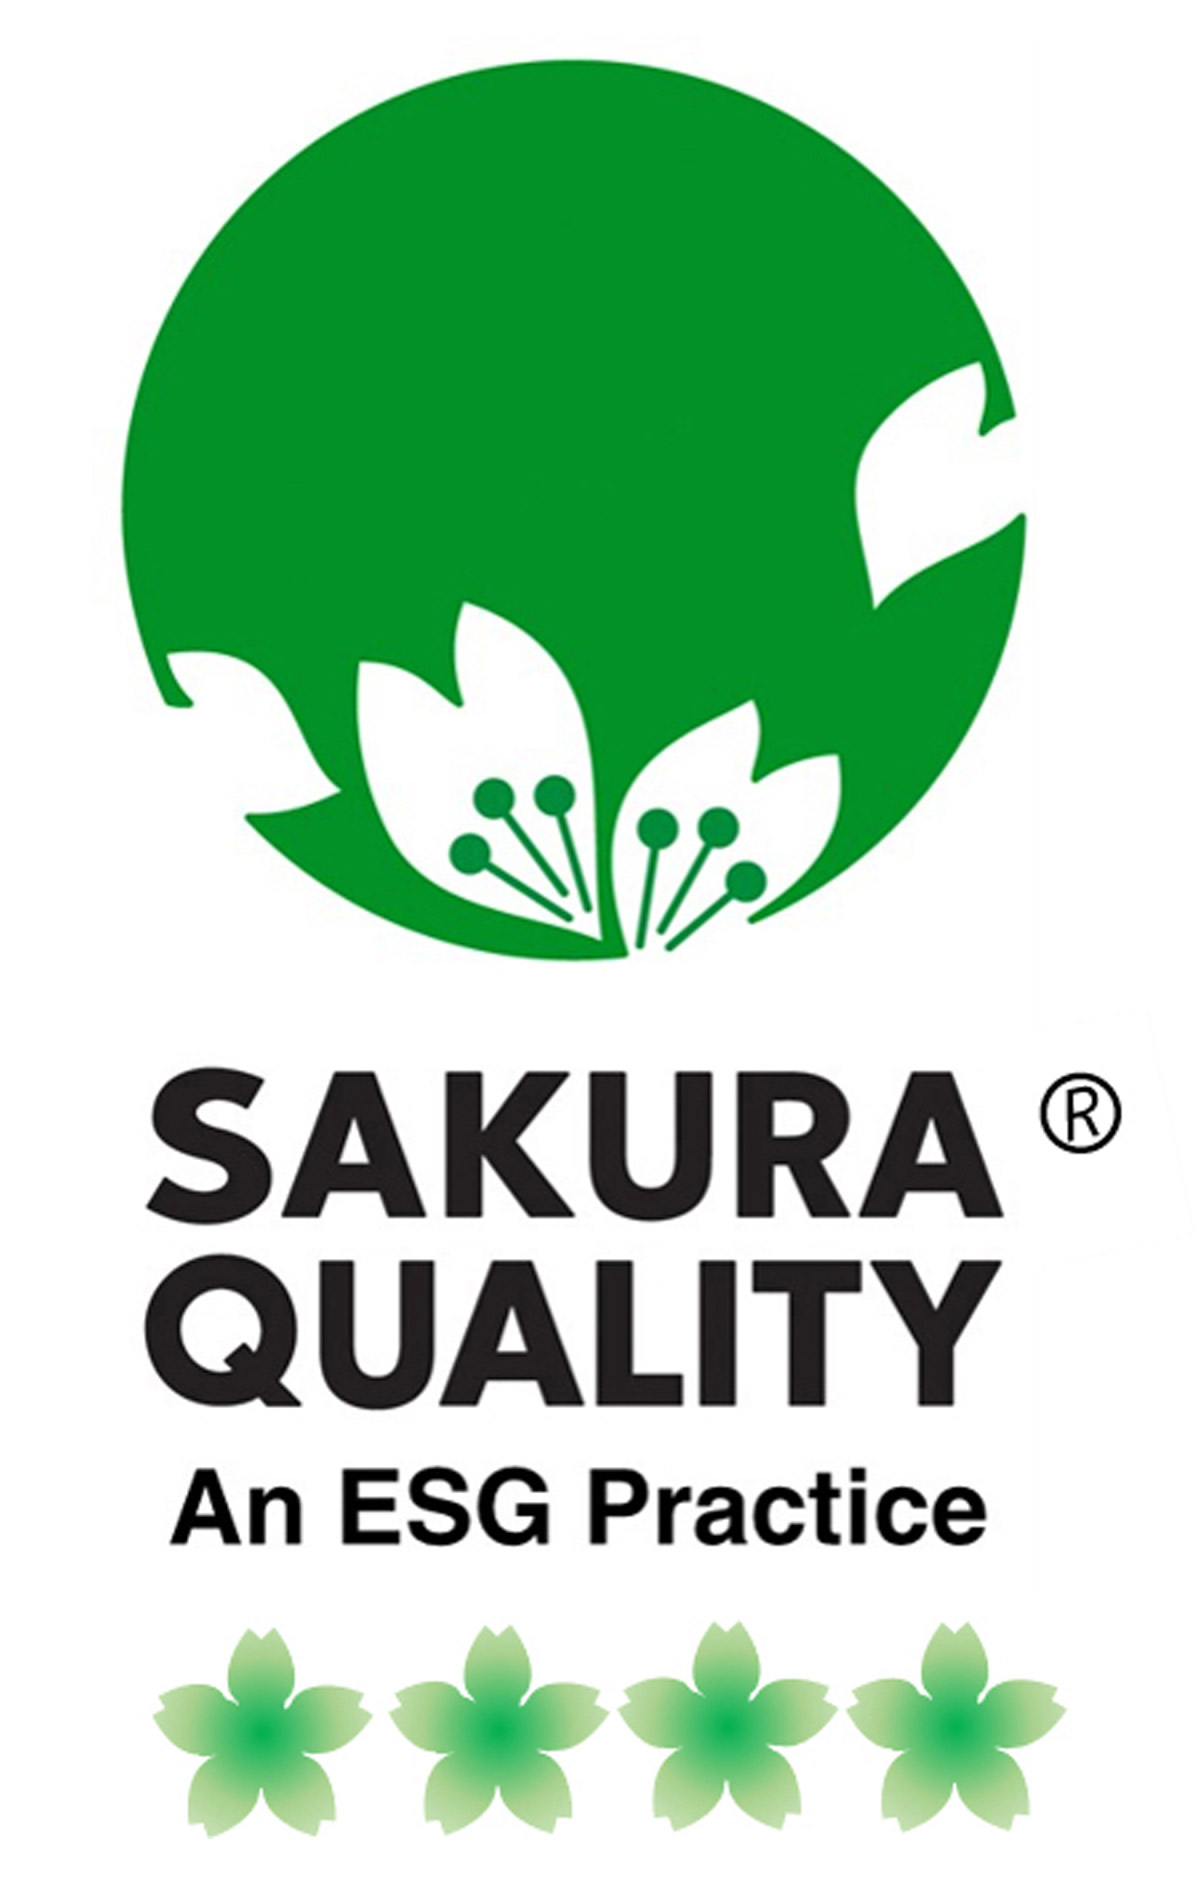 SDGsを実践する宿泊施設を認定する「Sakura Quality An ESG Practice」認証制度において、【4御衣黄（ぎょいこう）ザクラ】を